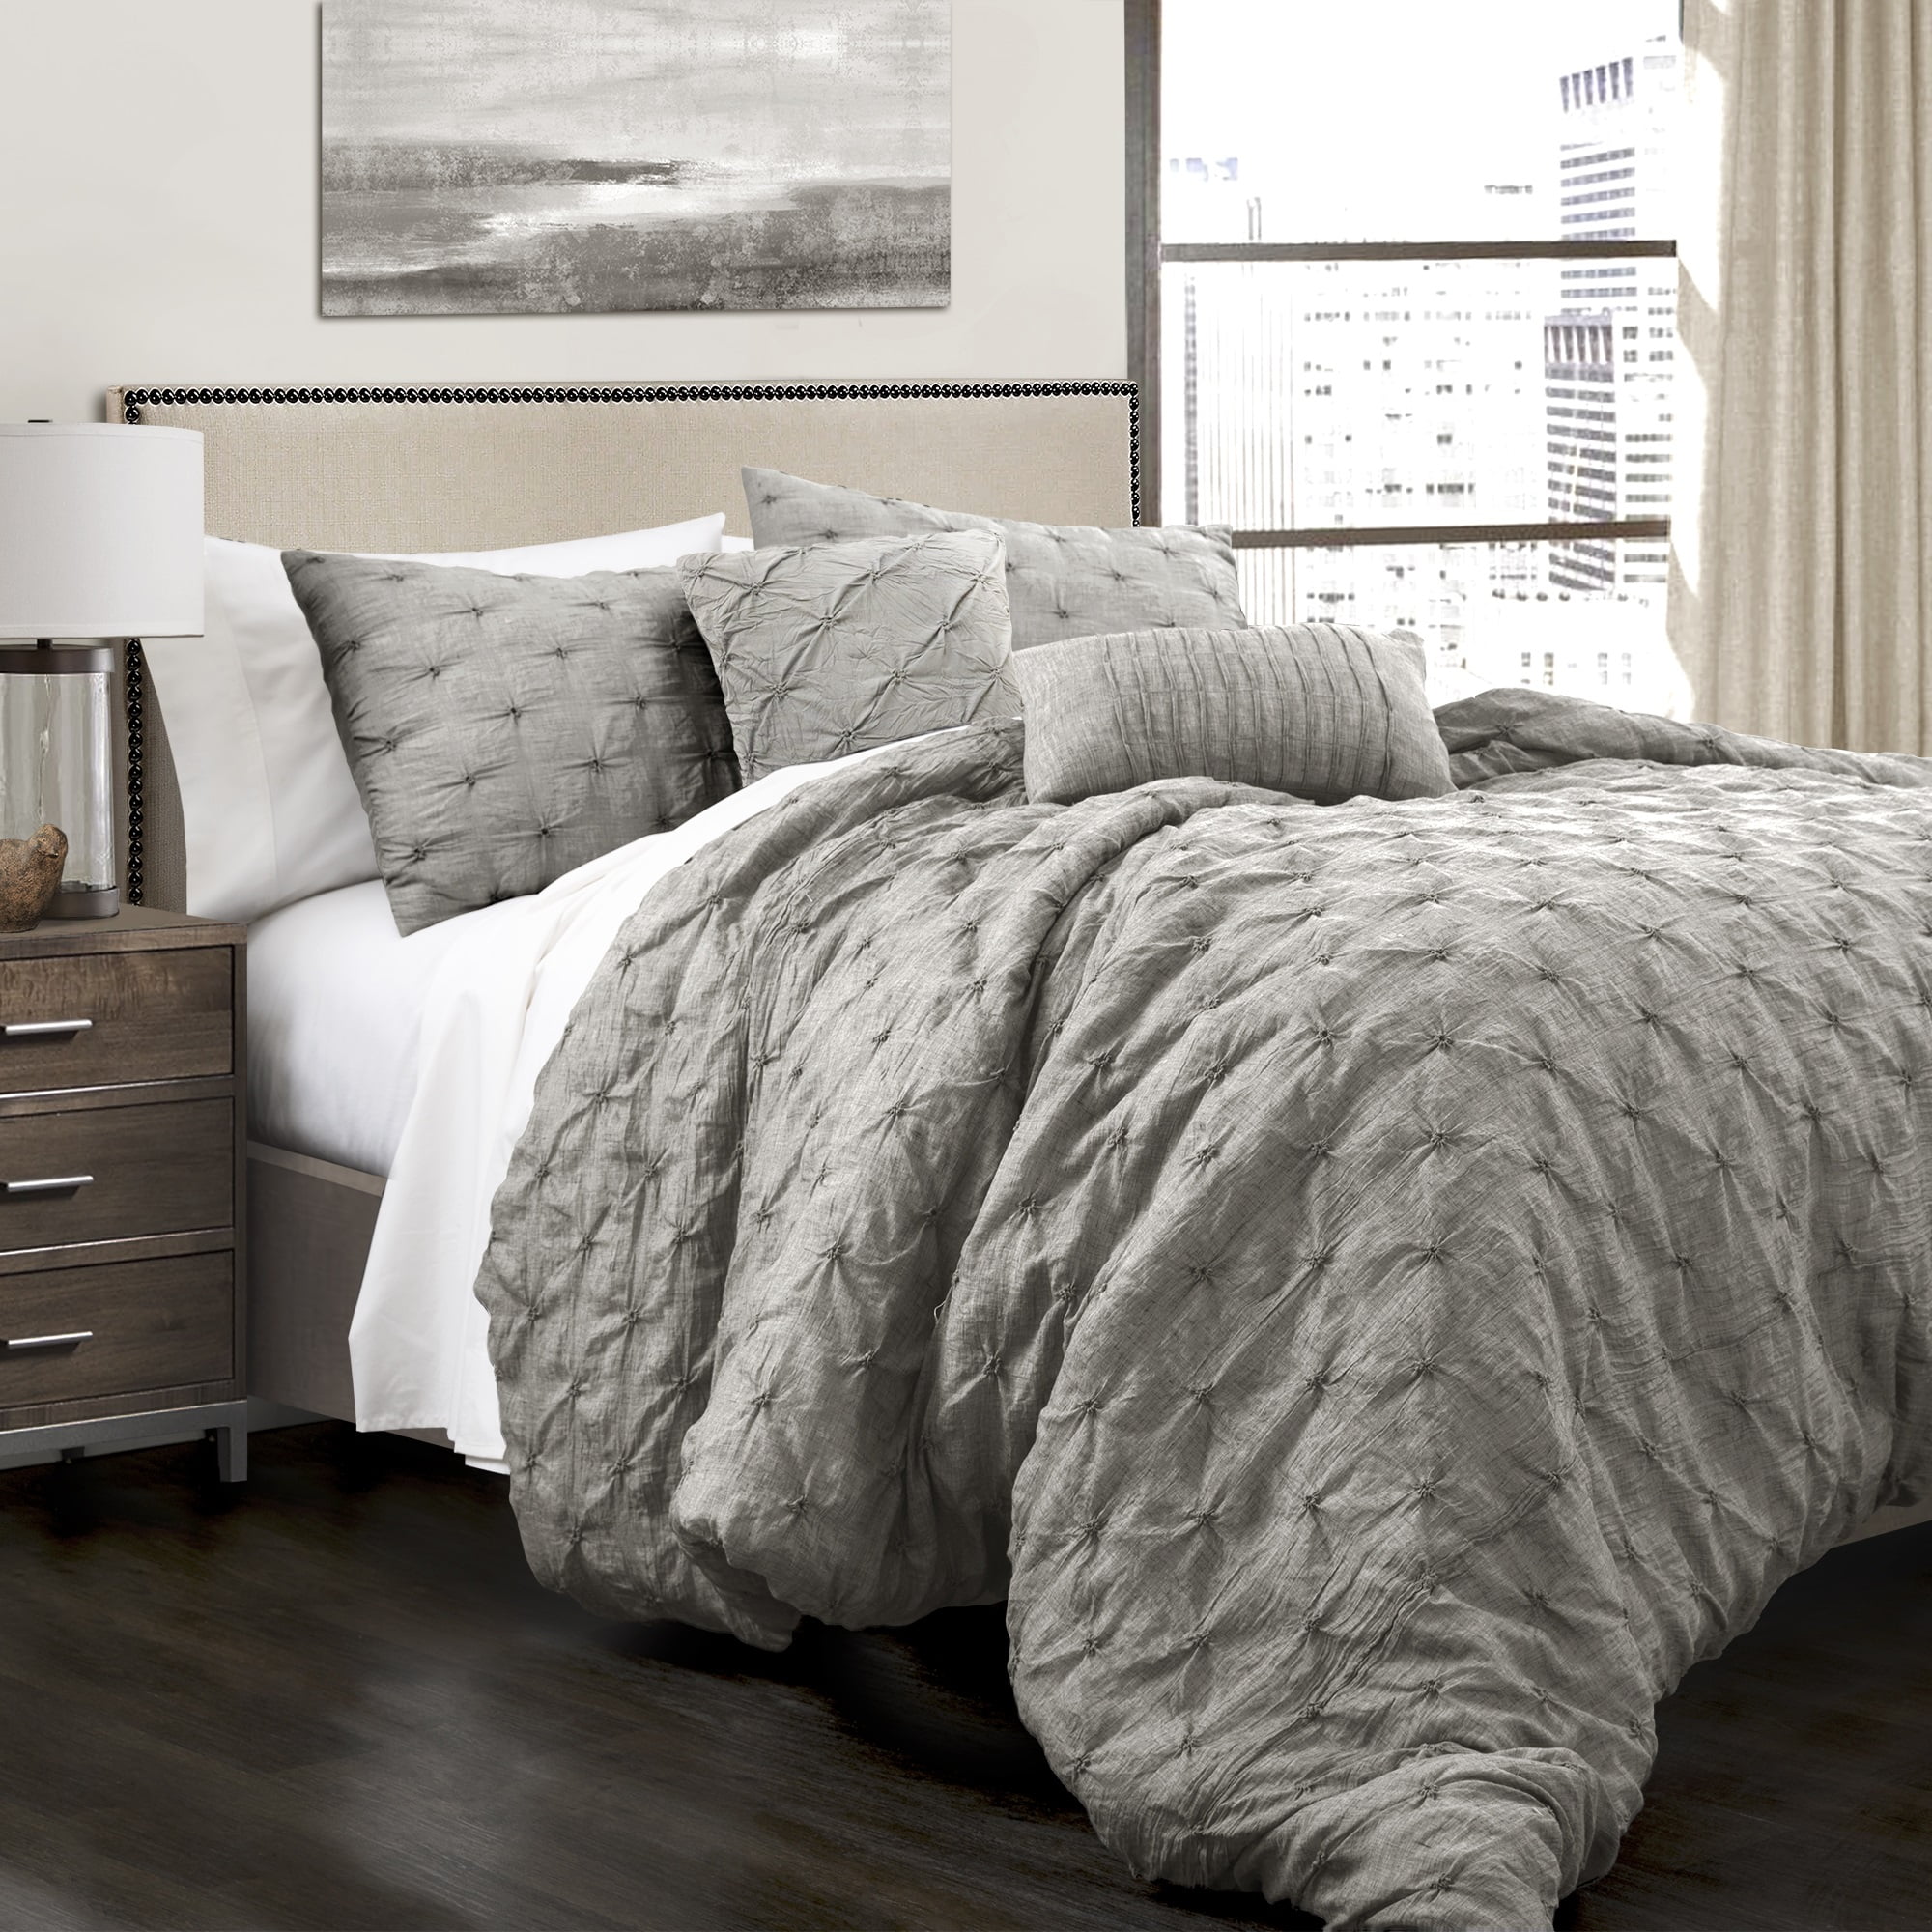 King Pintuck Comforter Set with Pillow Shams White 5 Piece Bedroom Bedding Set 